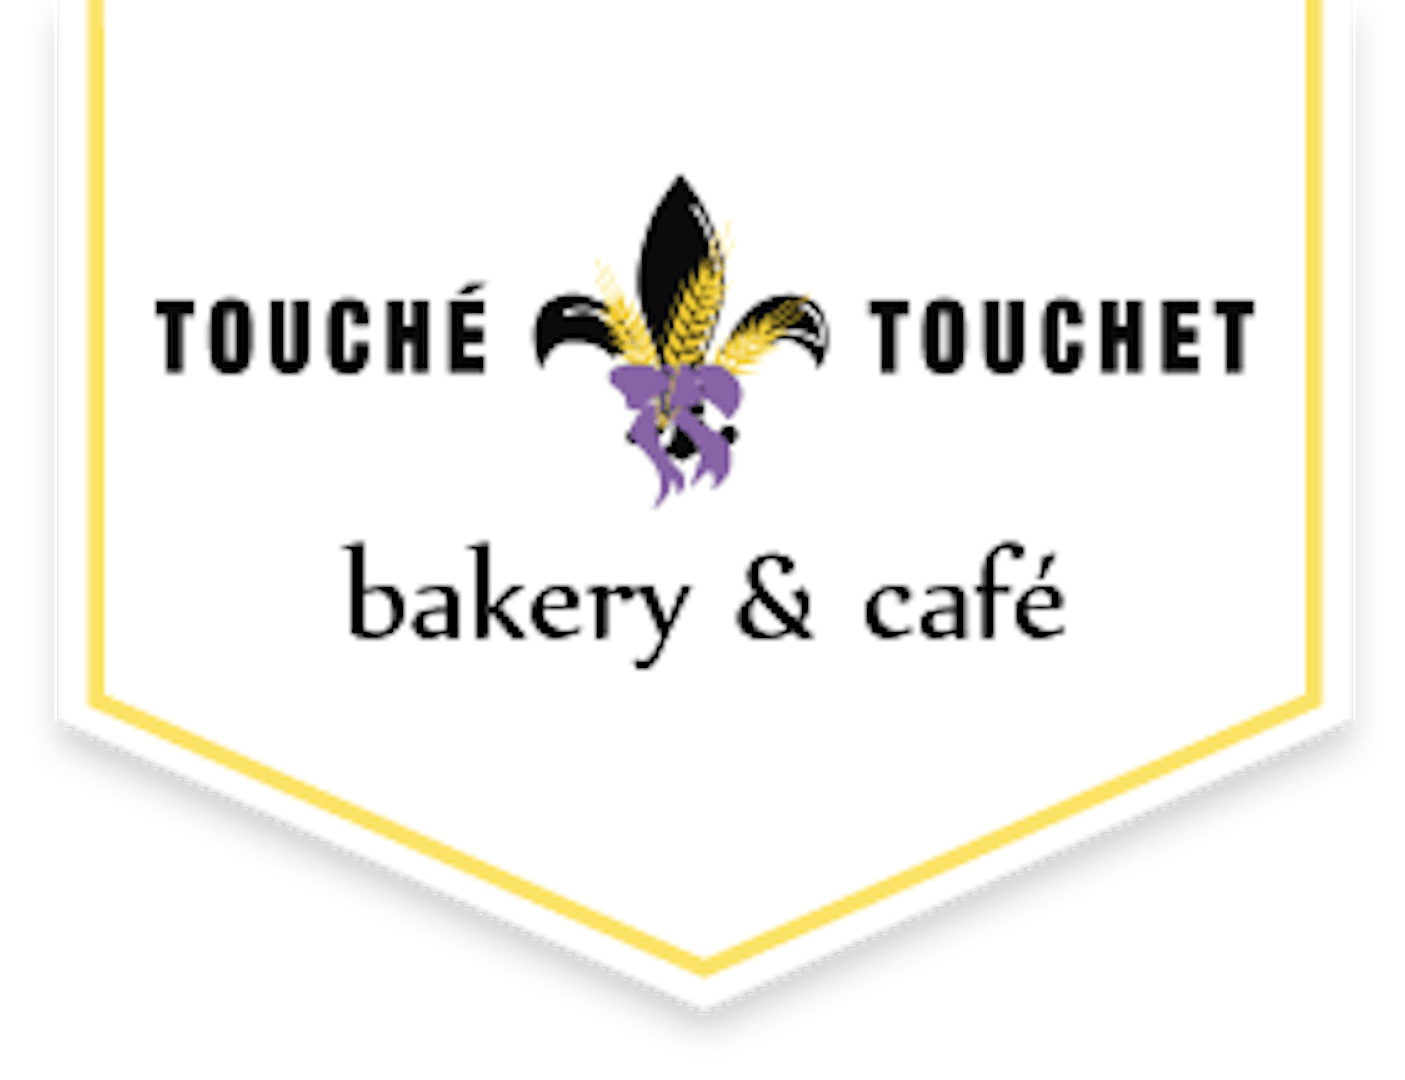 www.touchetouchetbakeryandcafe.com